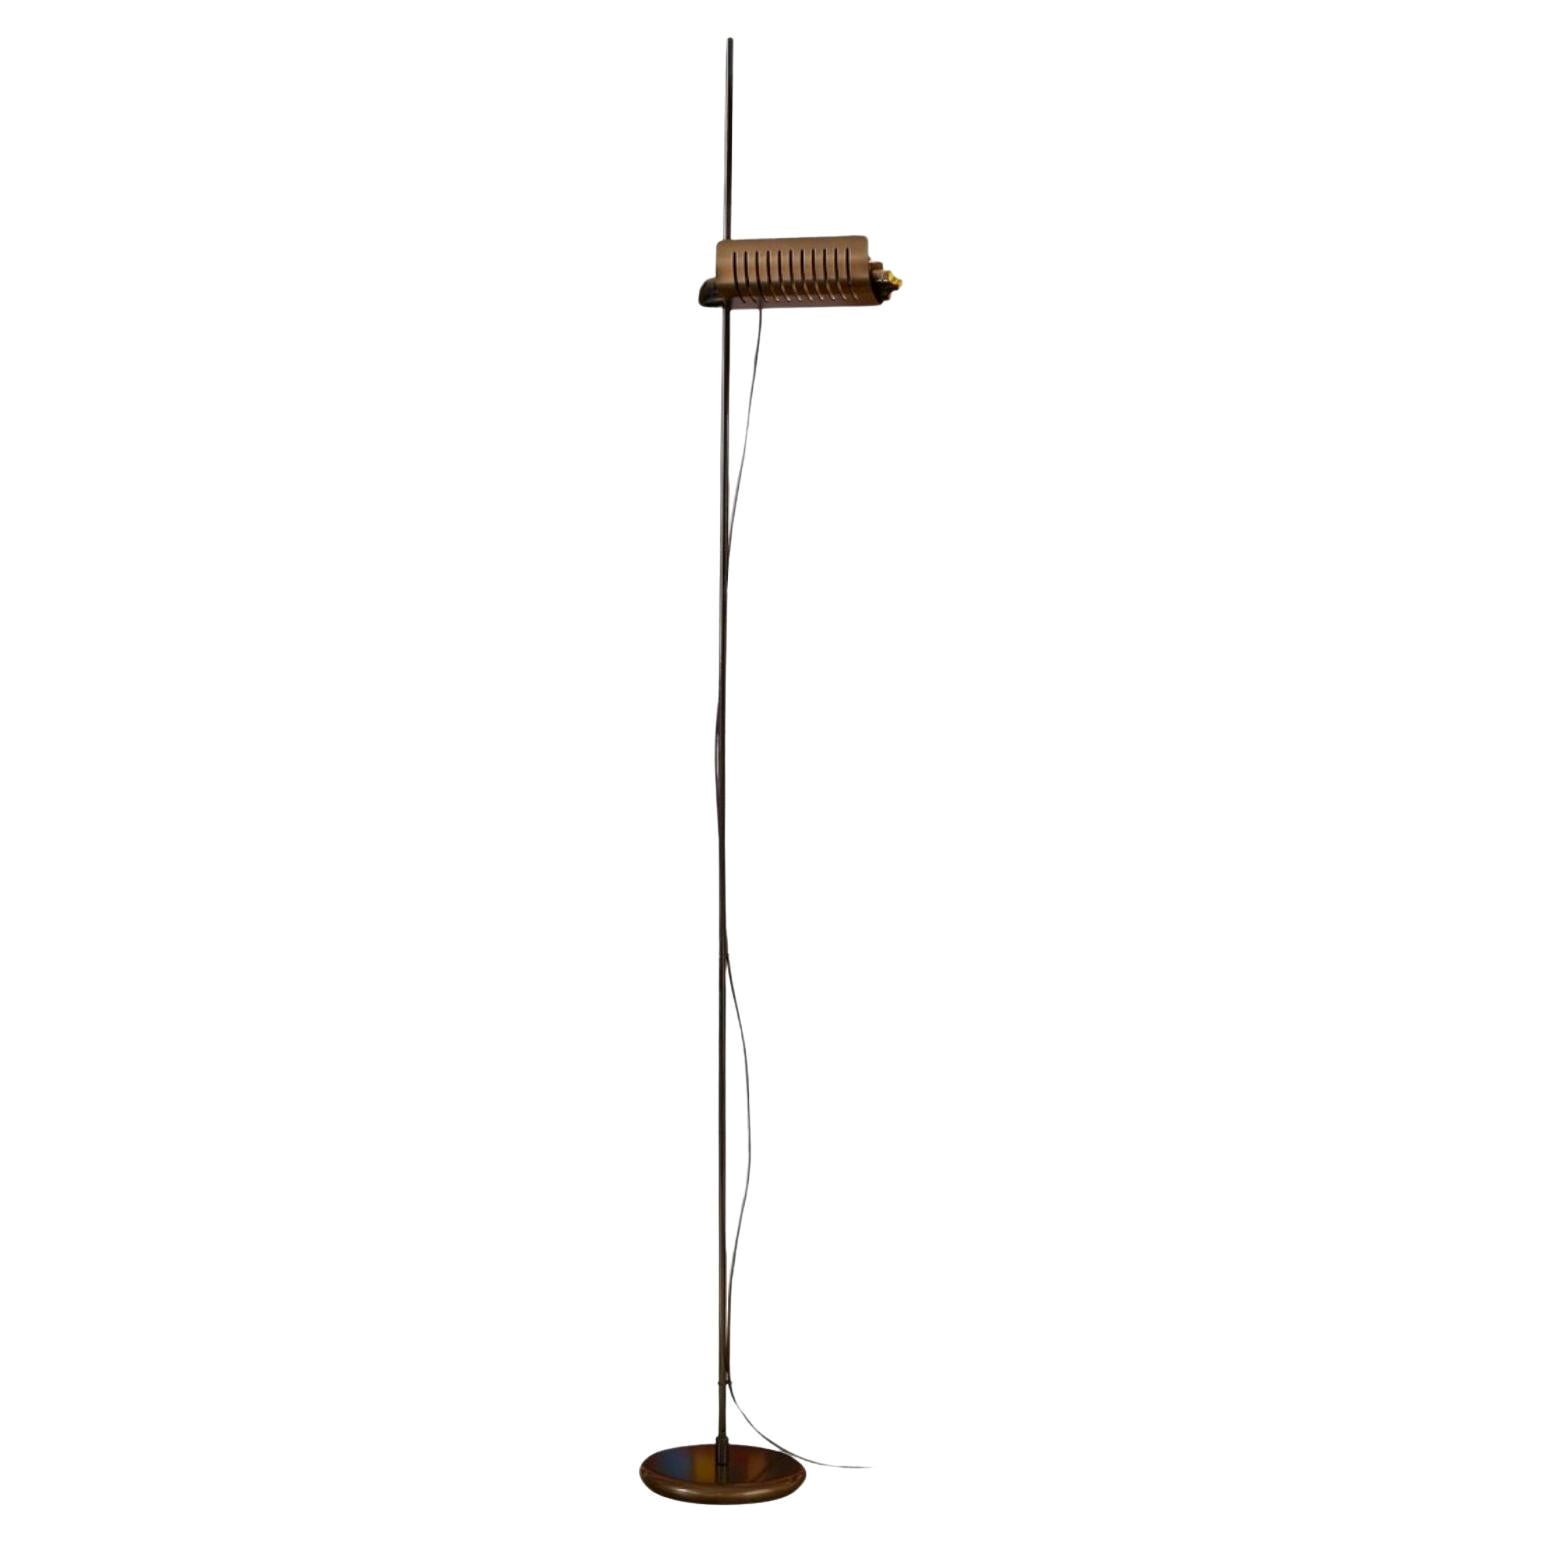 Joe Colombo Model #626 'Colombo' Floor Lamp in Anodic Bronze and Black for Oluce For Sale